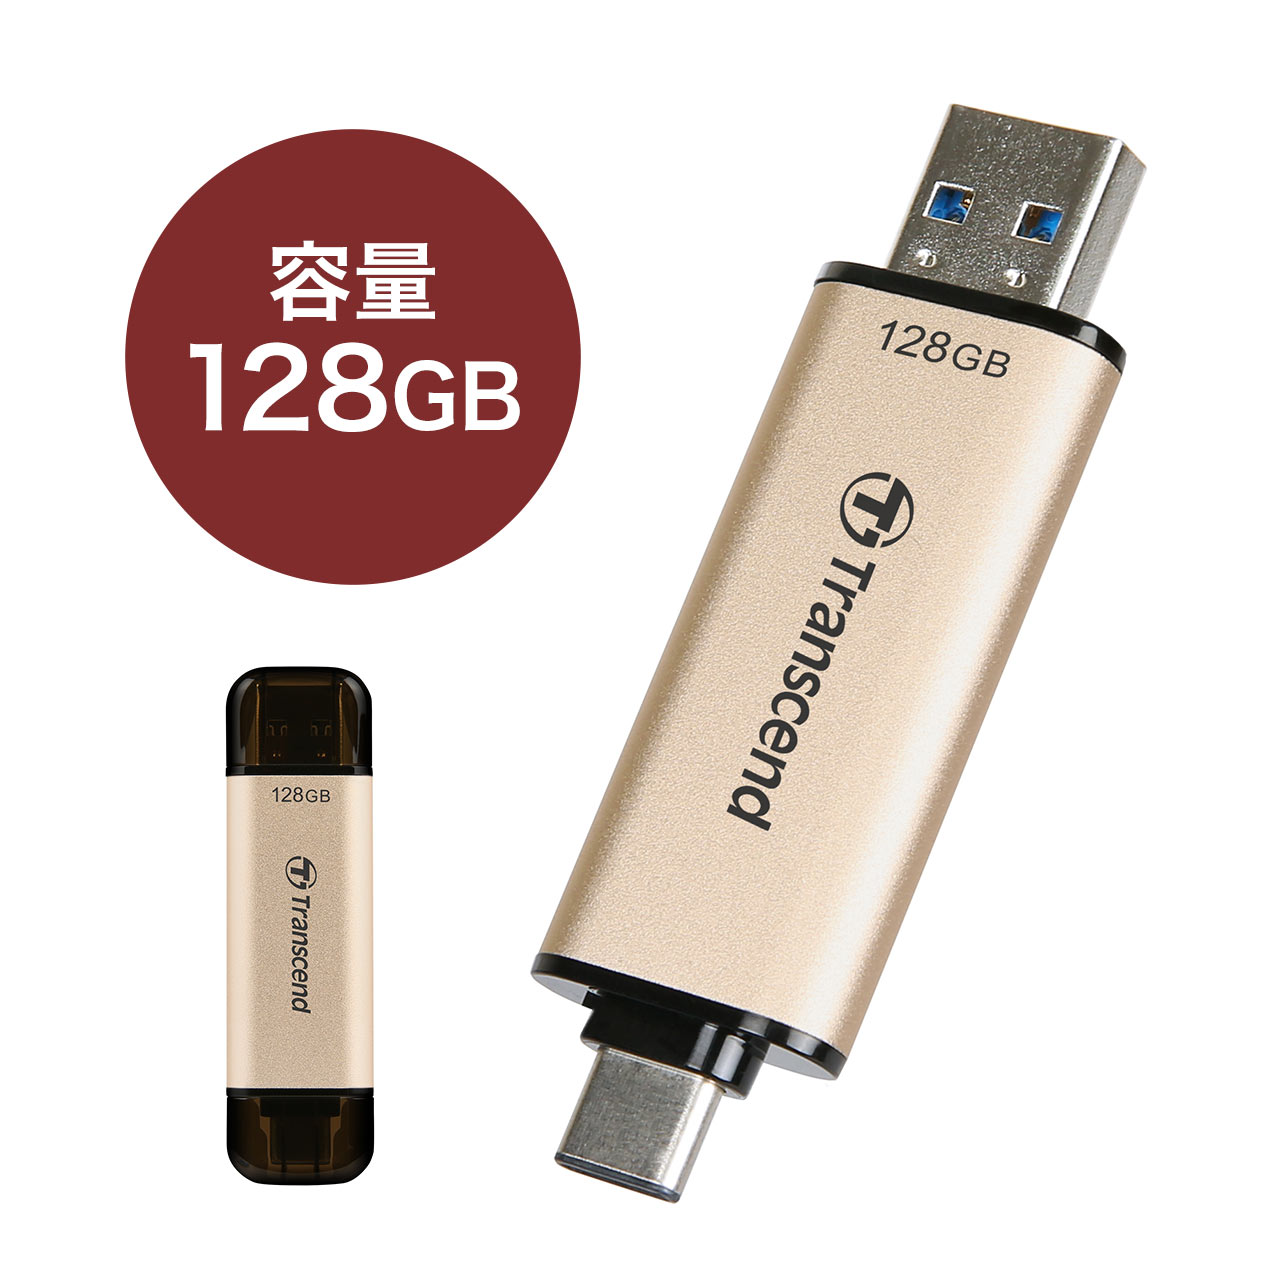 TS128GJF930C トランセンド 売却 ネコポス対応 送料無料 Transcend USBメモリ JetFlash 128GB Gen1 USB3.2 930C [再販ご予約限定送料無料]